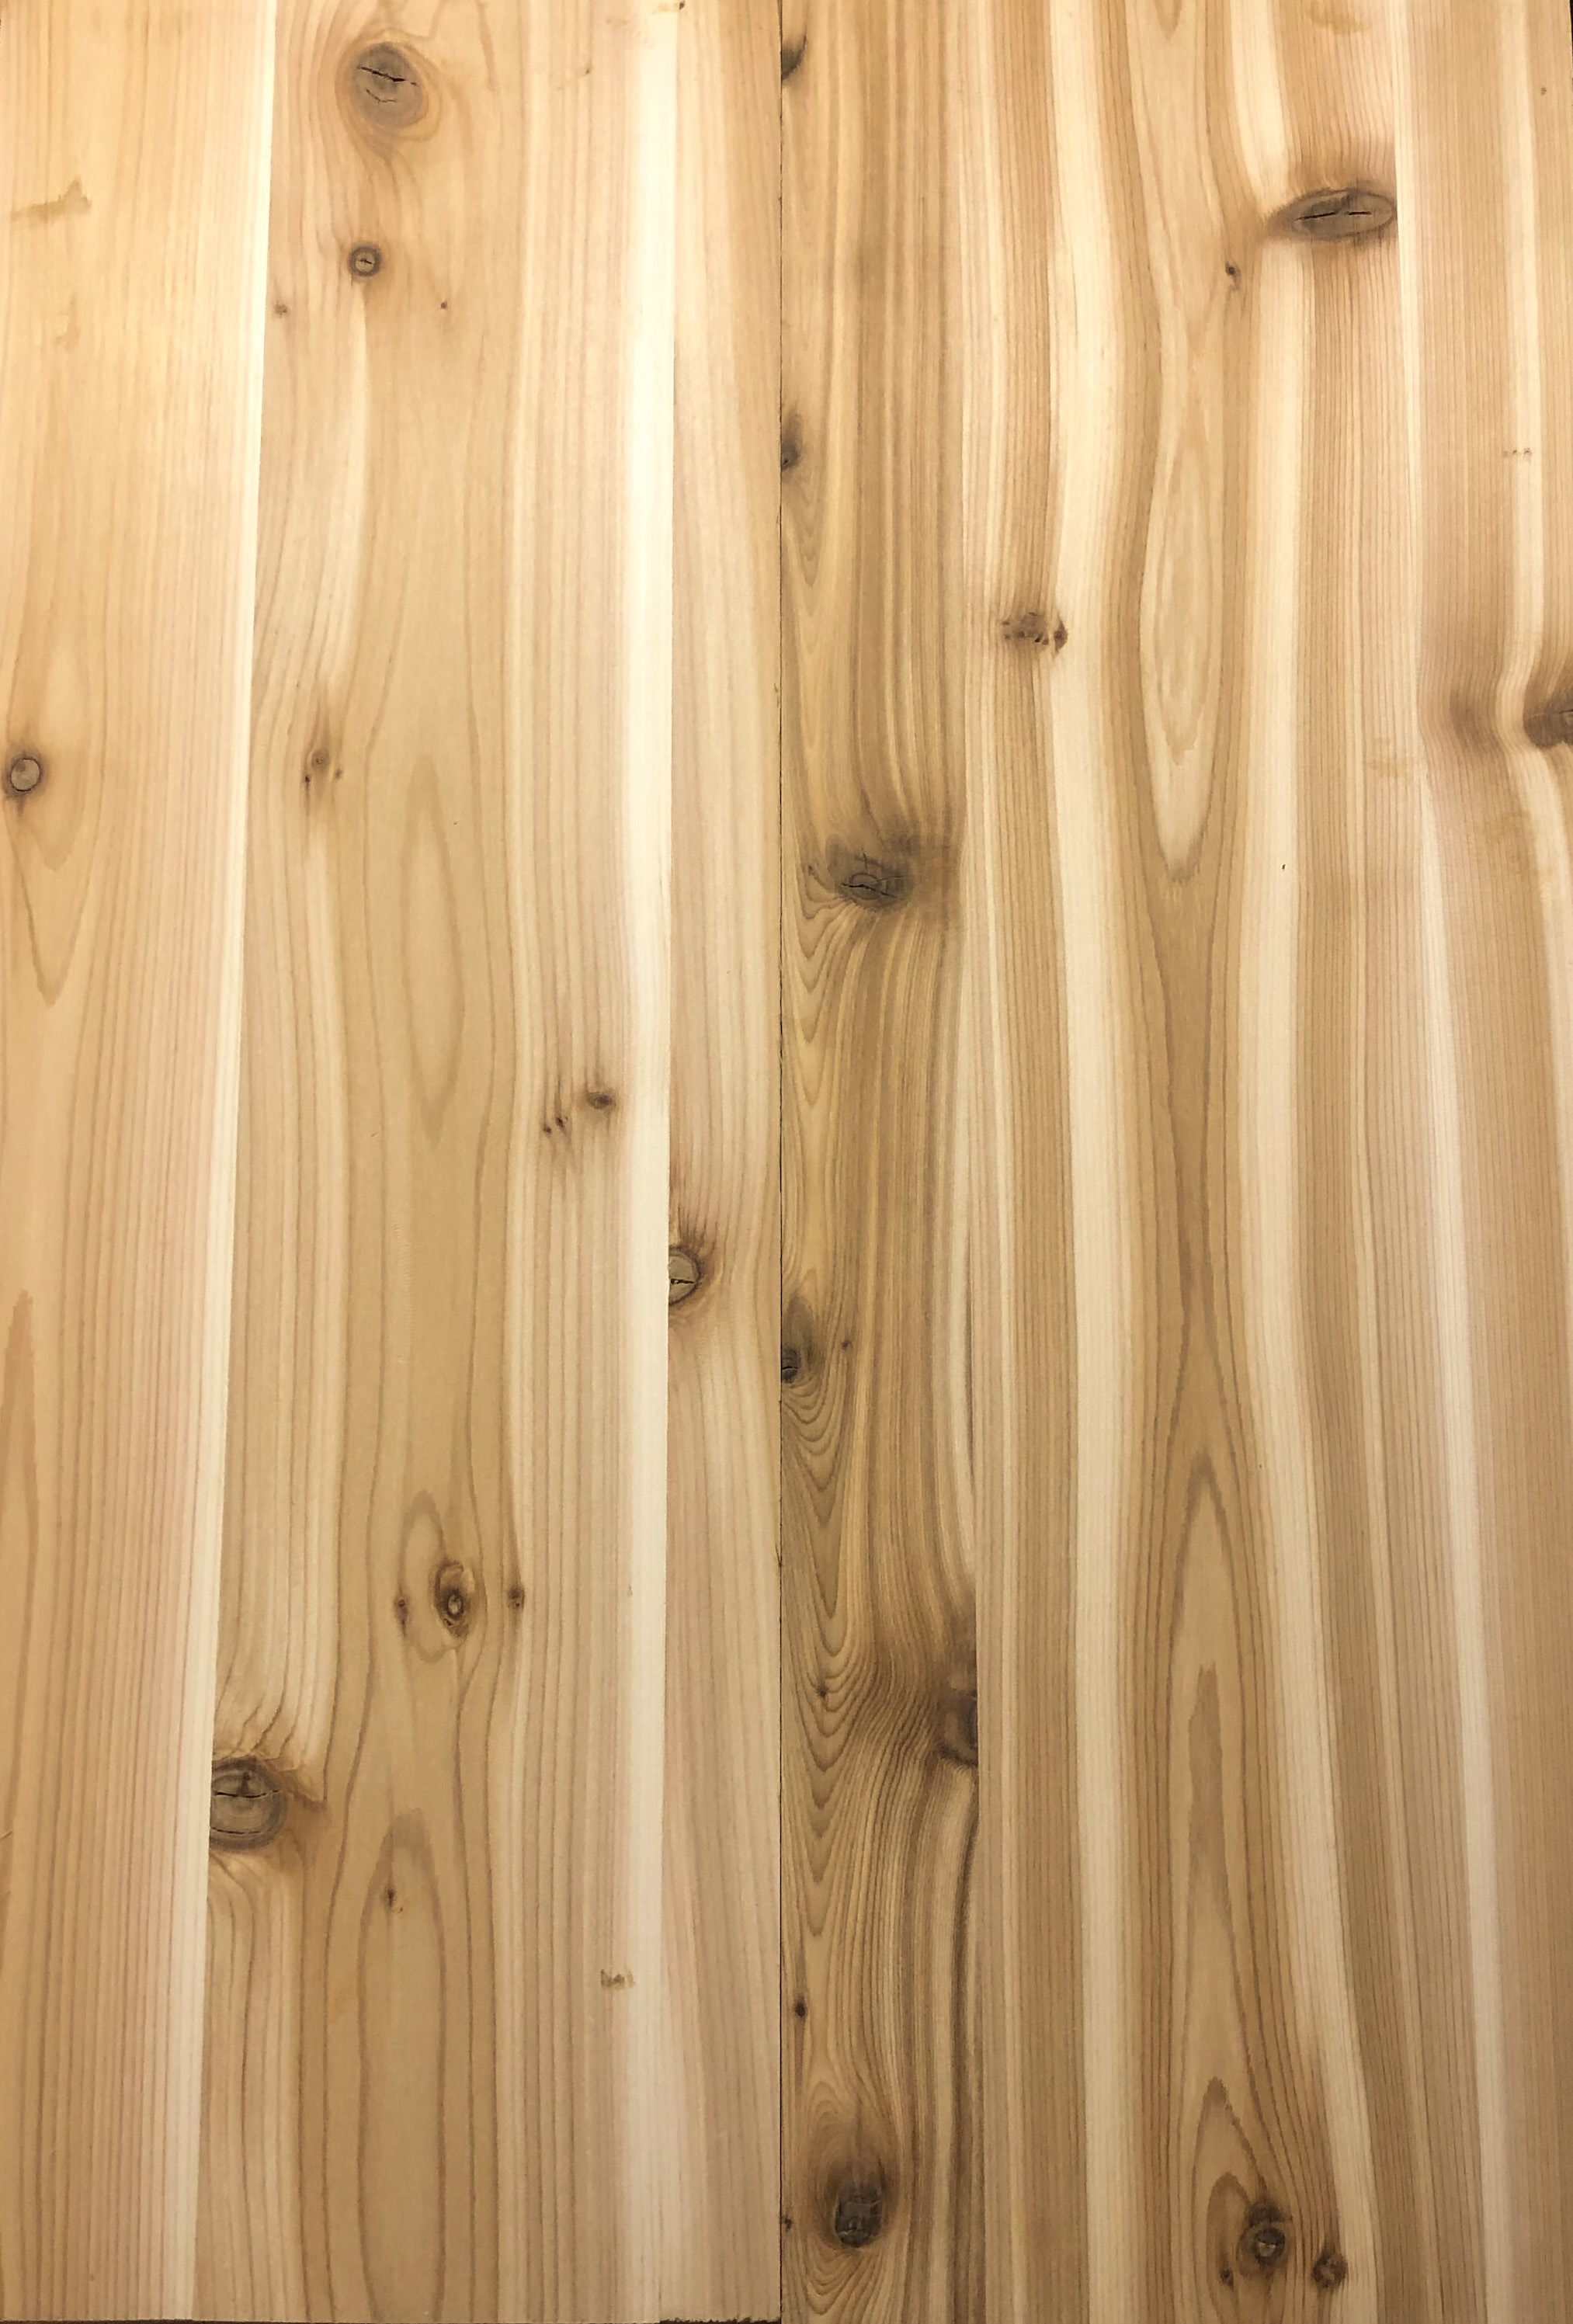 RBM - Cedar Doors and wood products